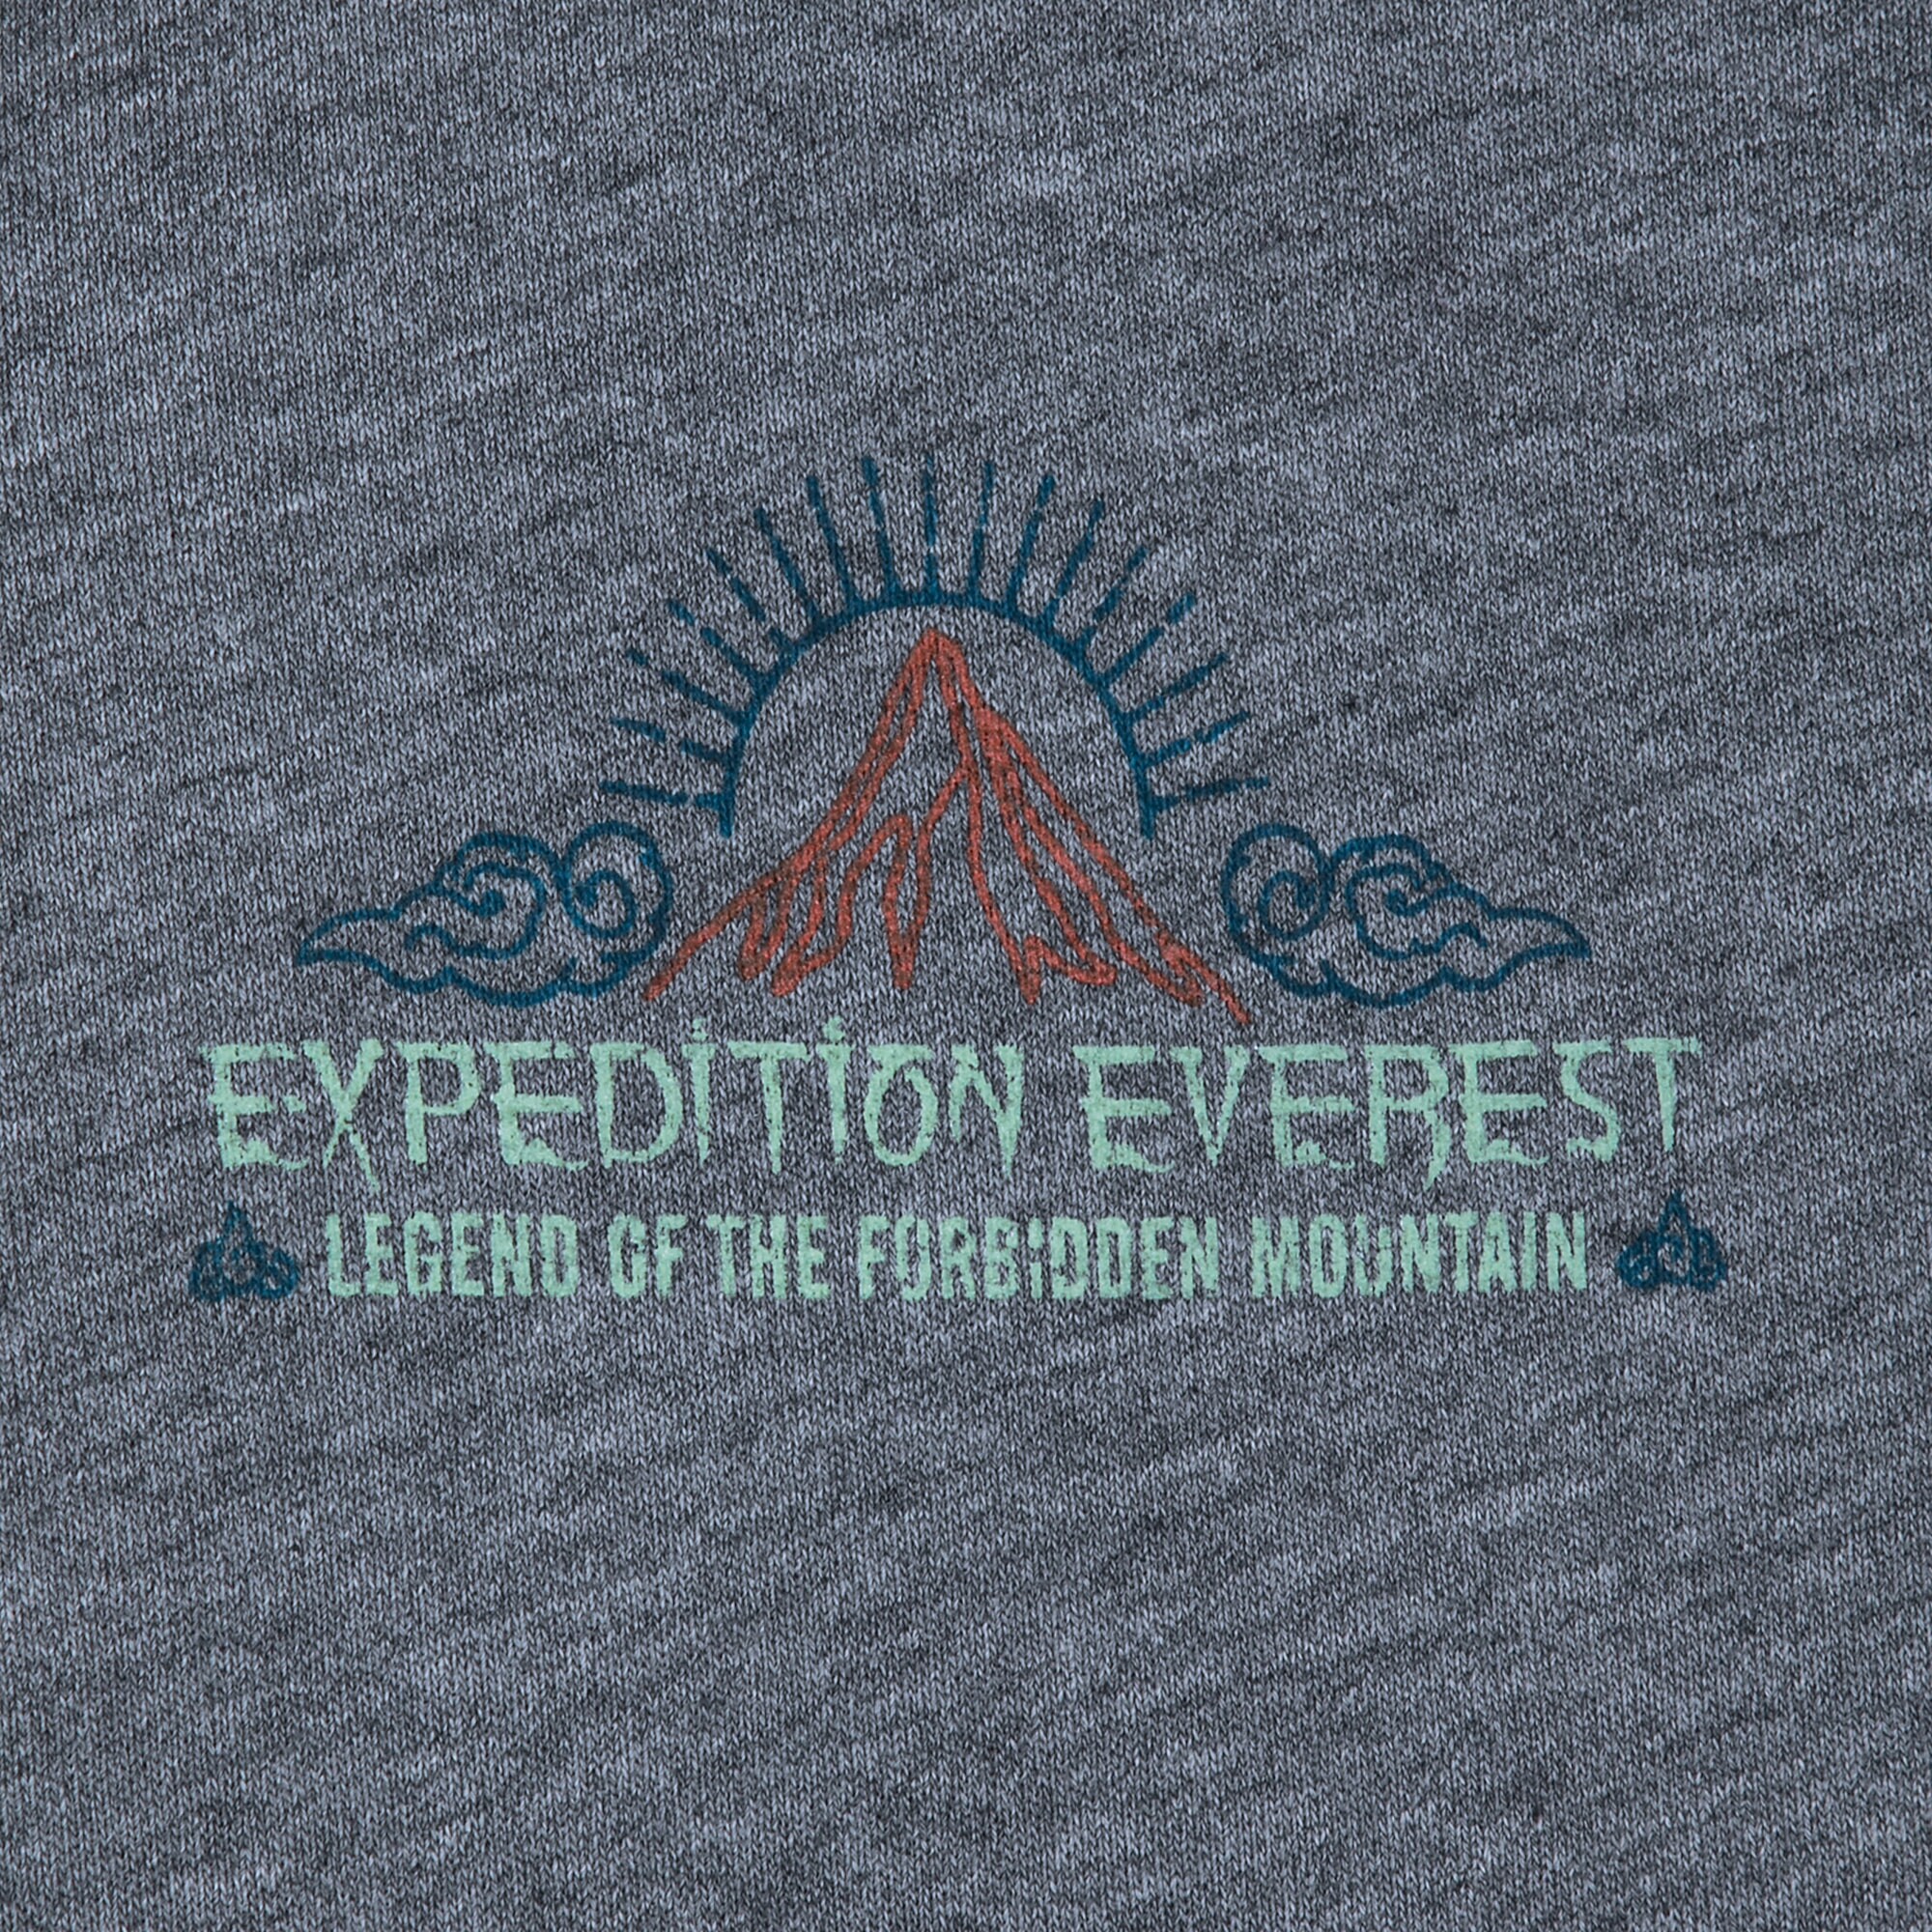 Expedition Everest Zip Hoodie for Women